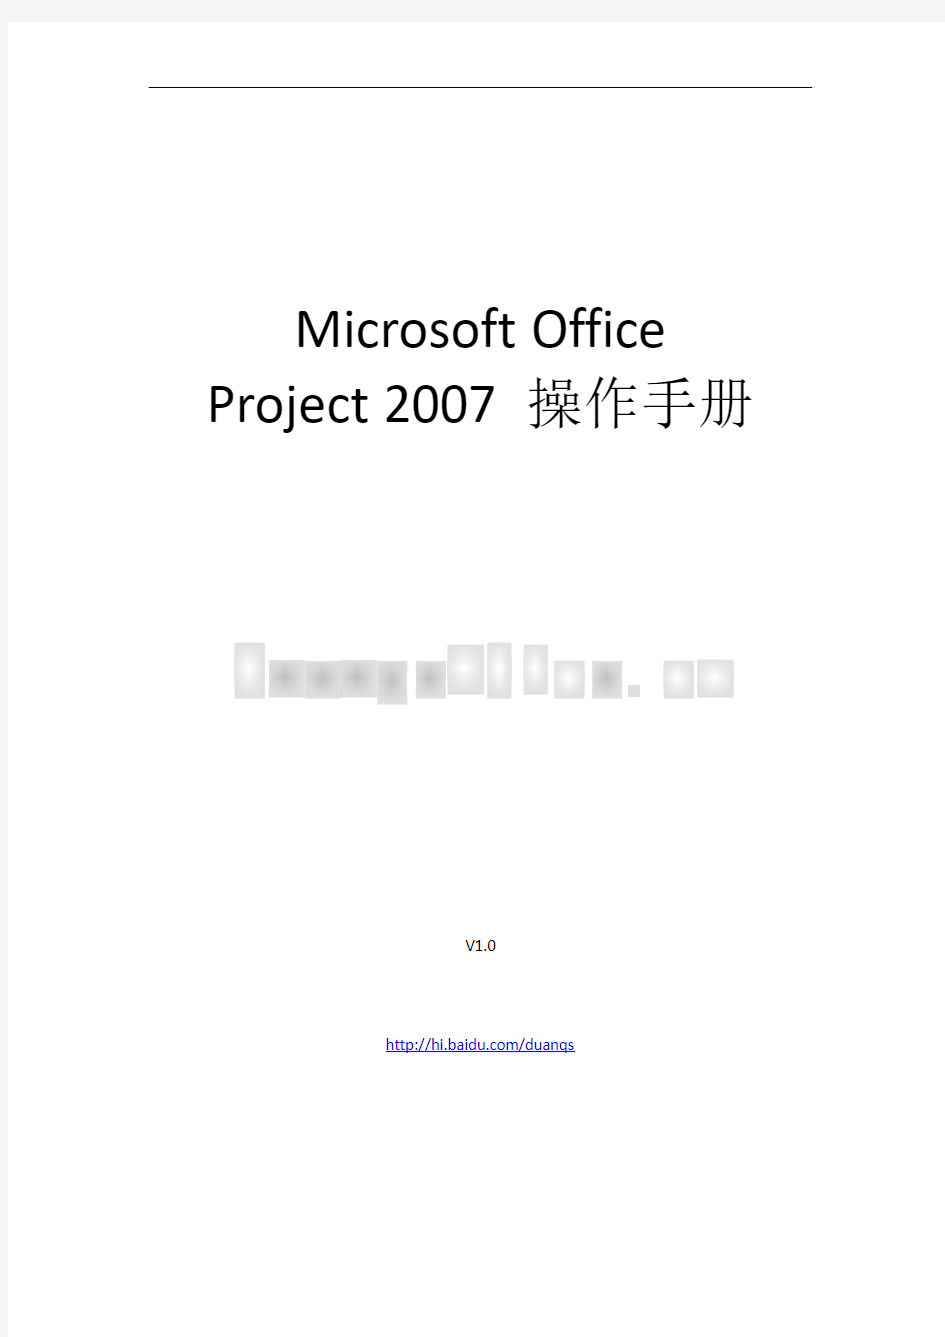 Microsoft+Office+Project+2007+操作手册V1